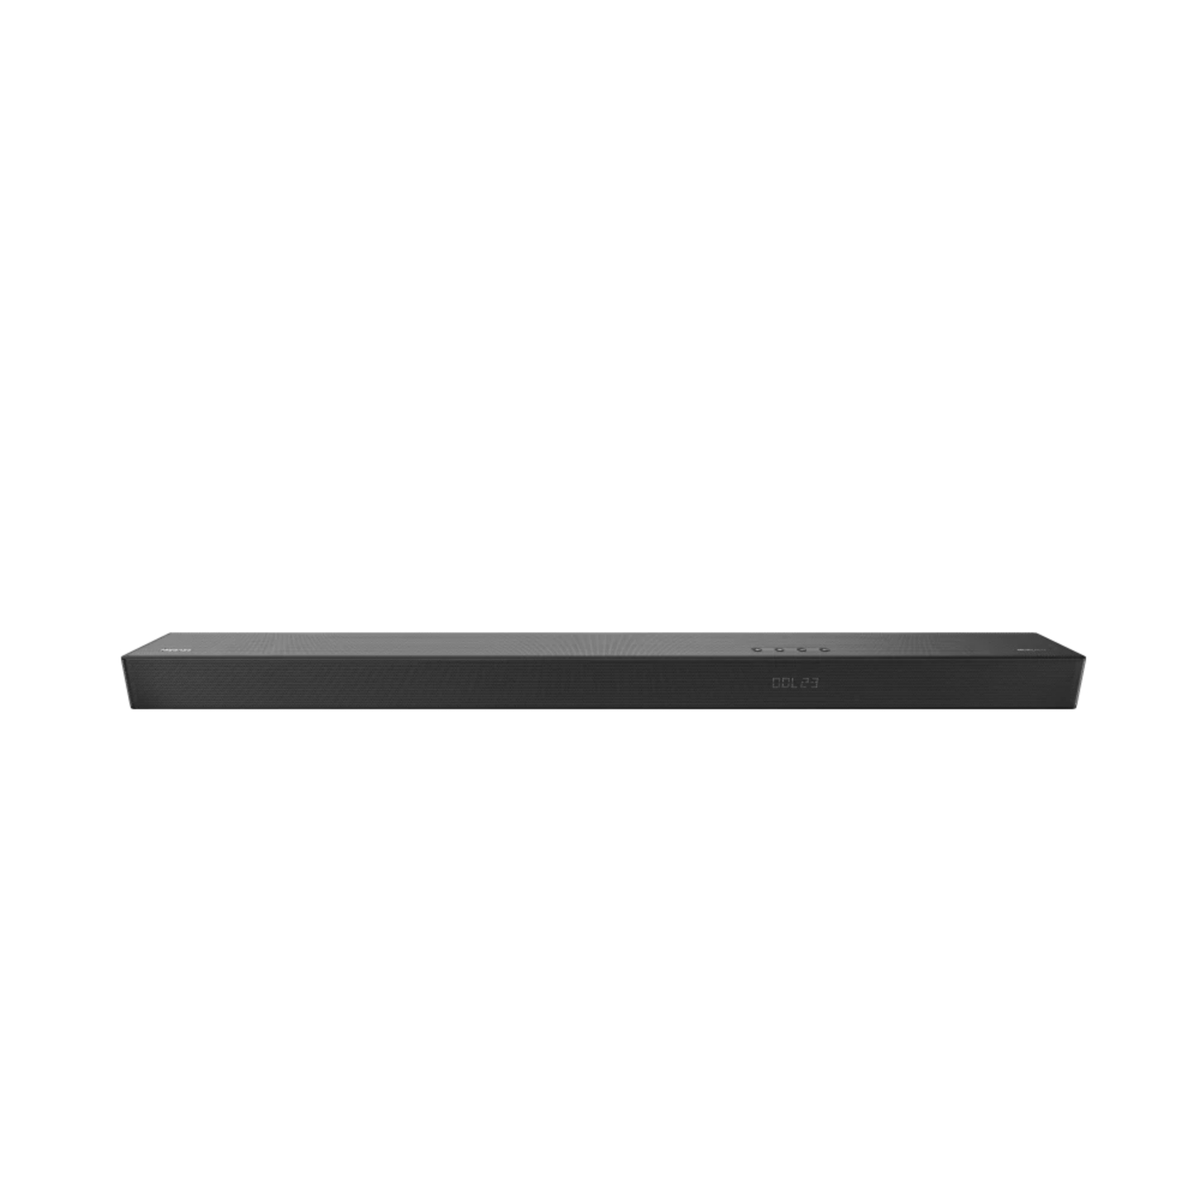 Hisense 5.1.2 ch Premium Sound Bar with Wireless Subwoofer, 510W, 7 EQ Modes, U5120G, Black